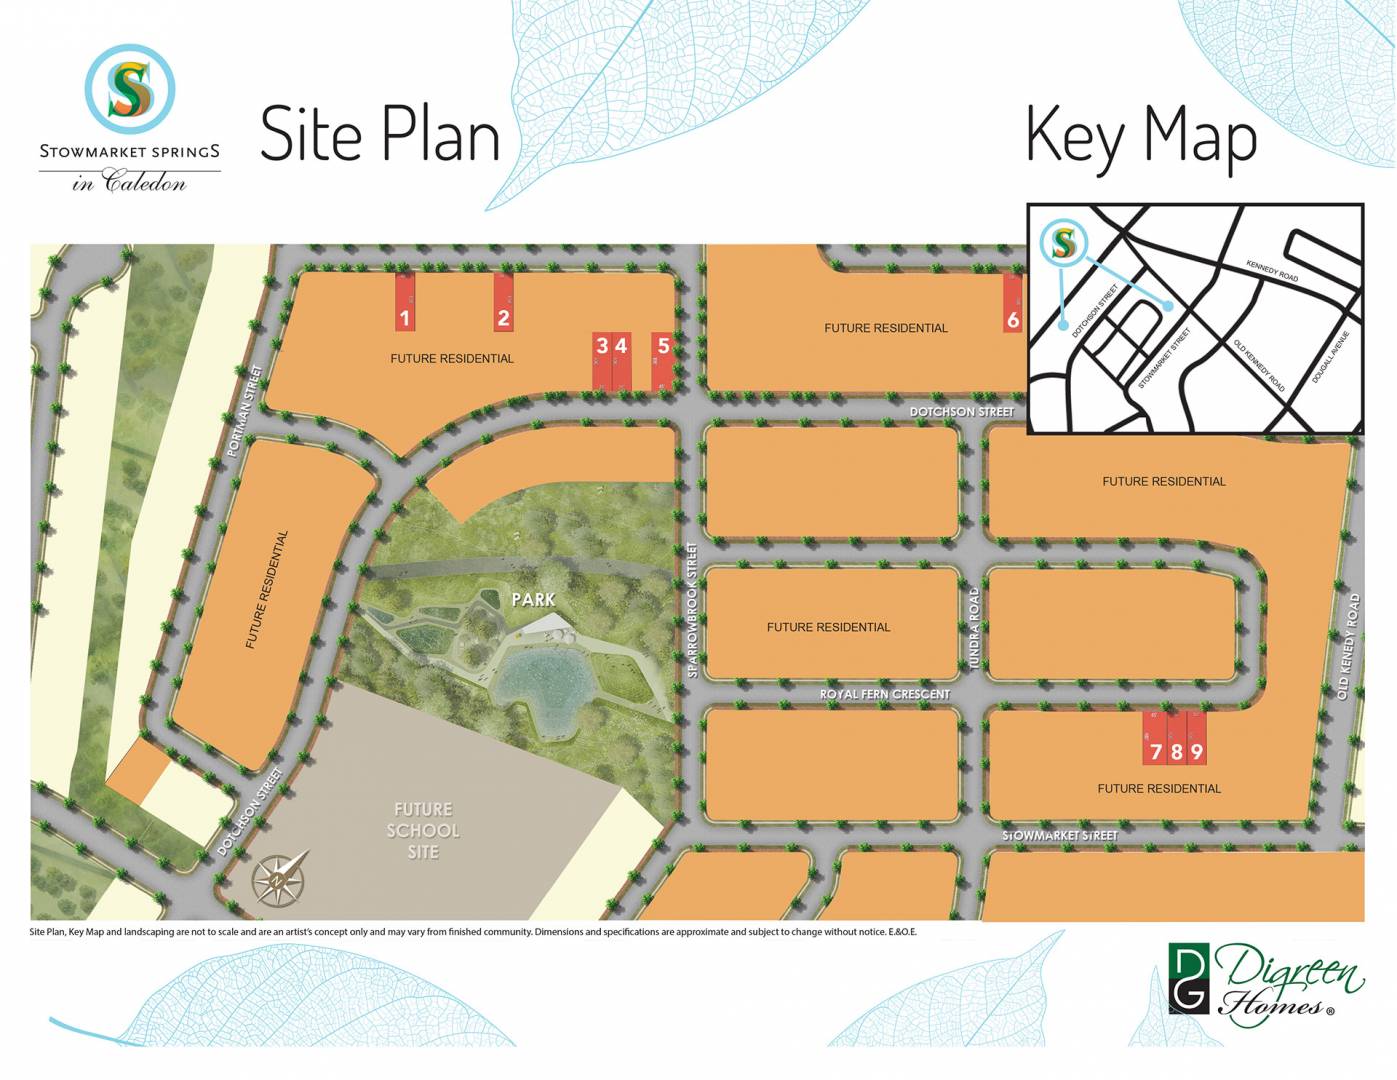 Stowmarket Springs Site Plan